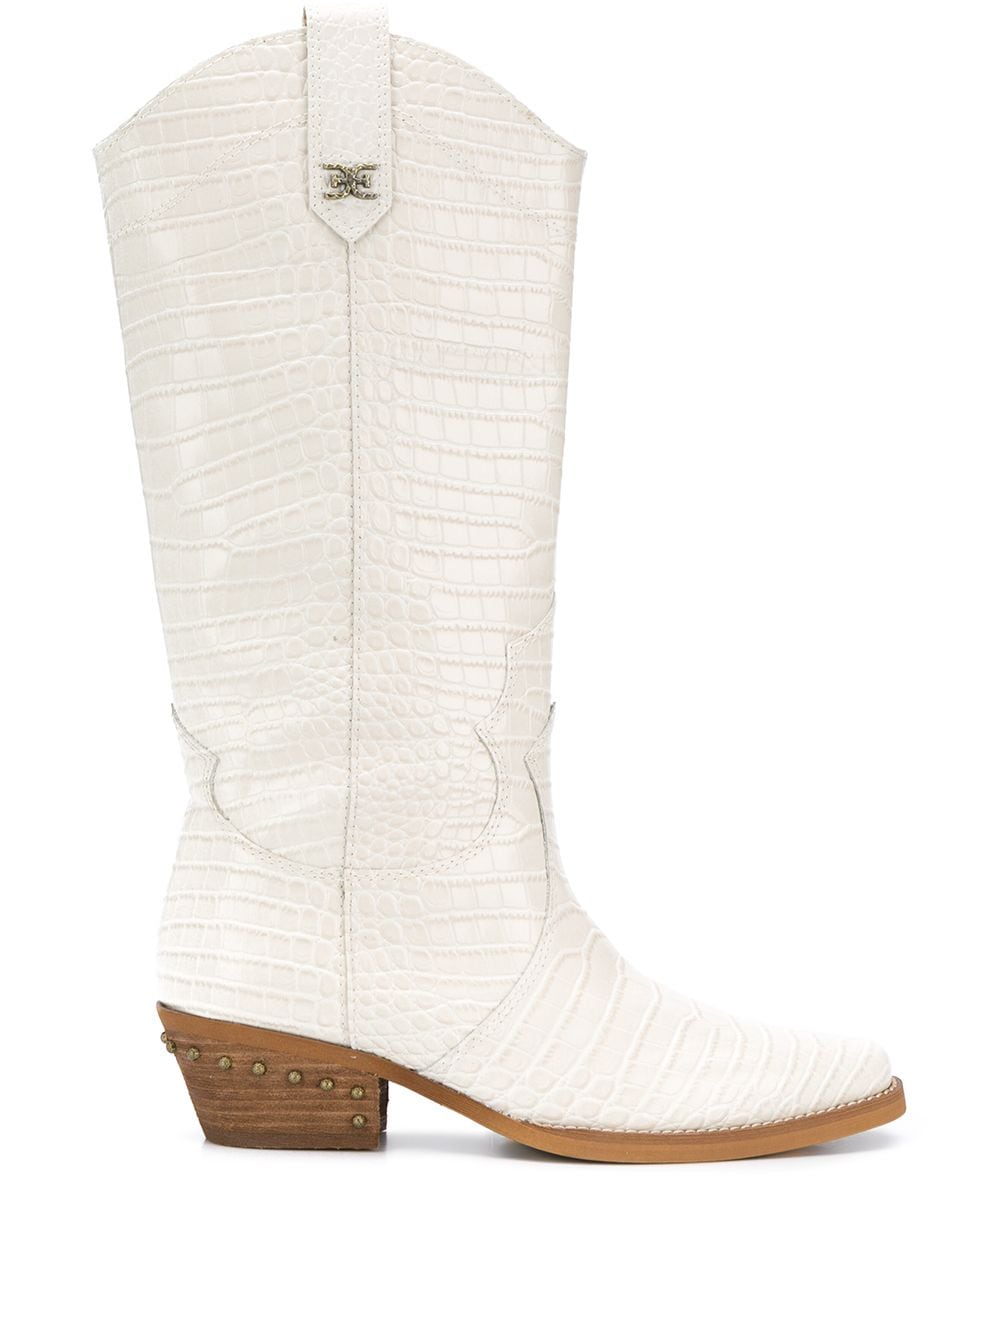 white croc western boots